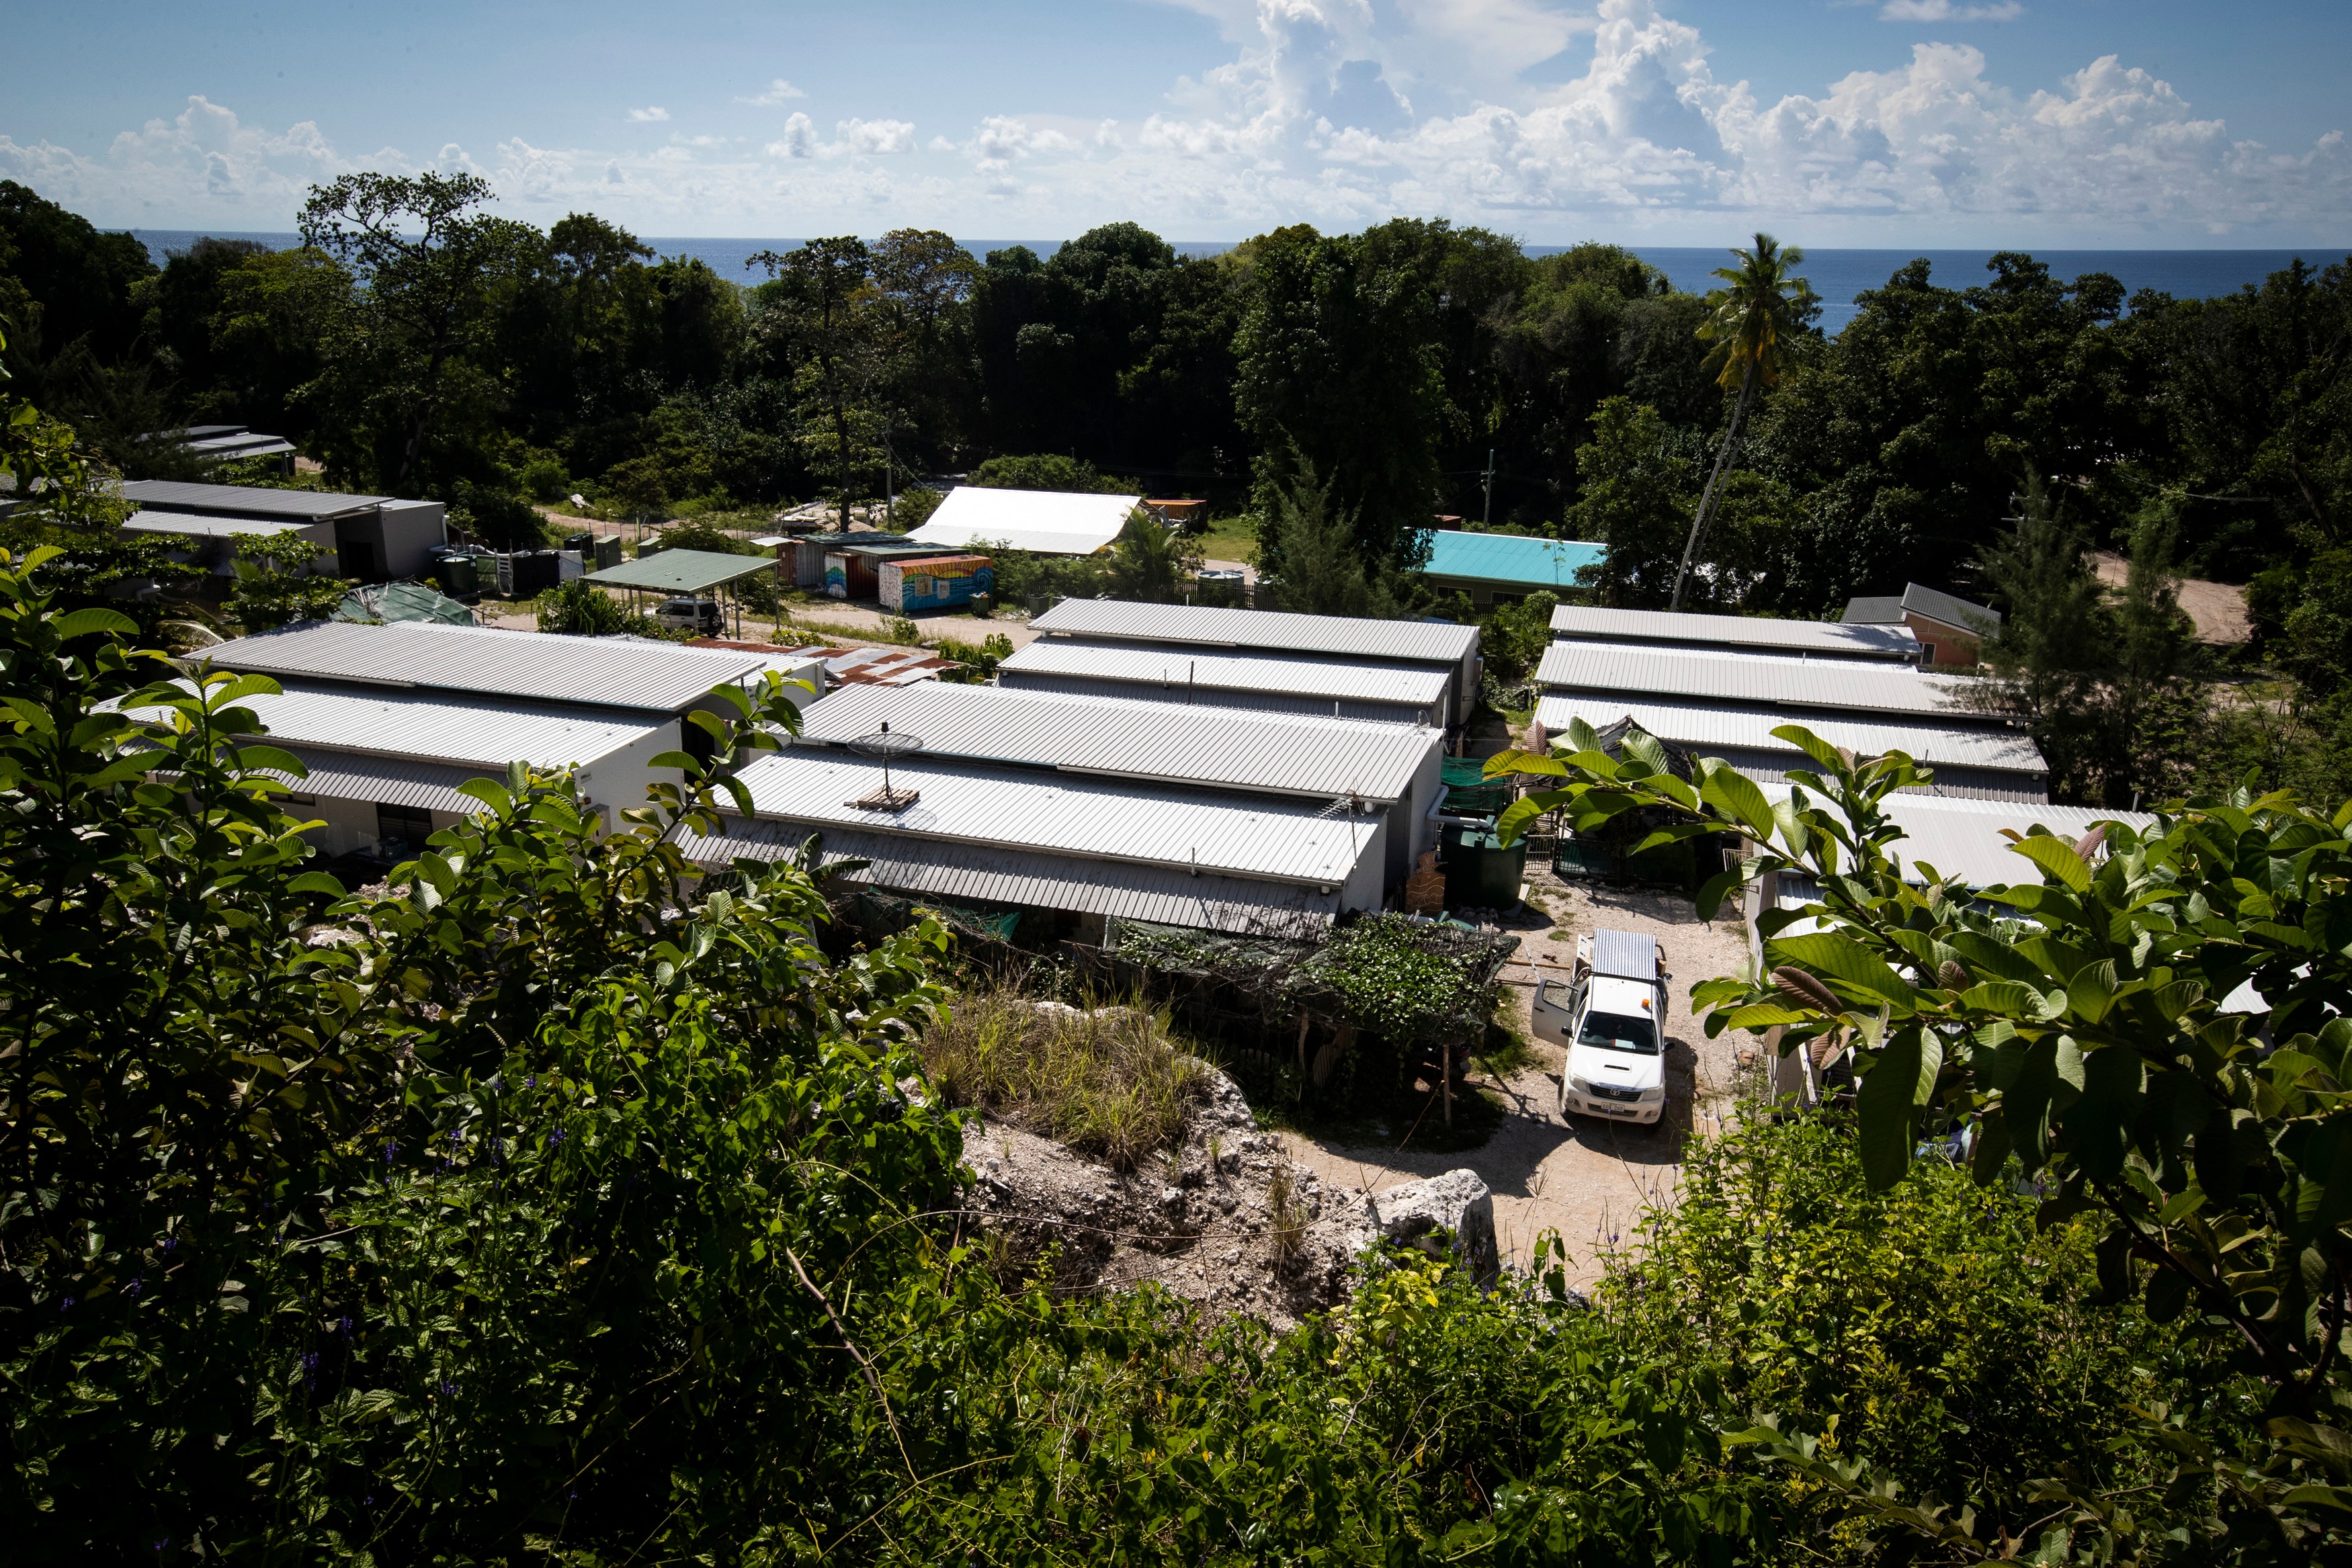 Accommodation facilities at a refugee settlement on Nauru.